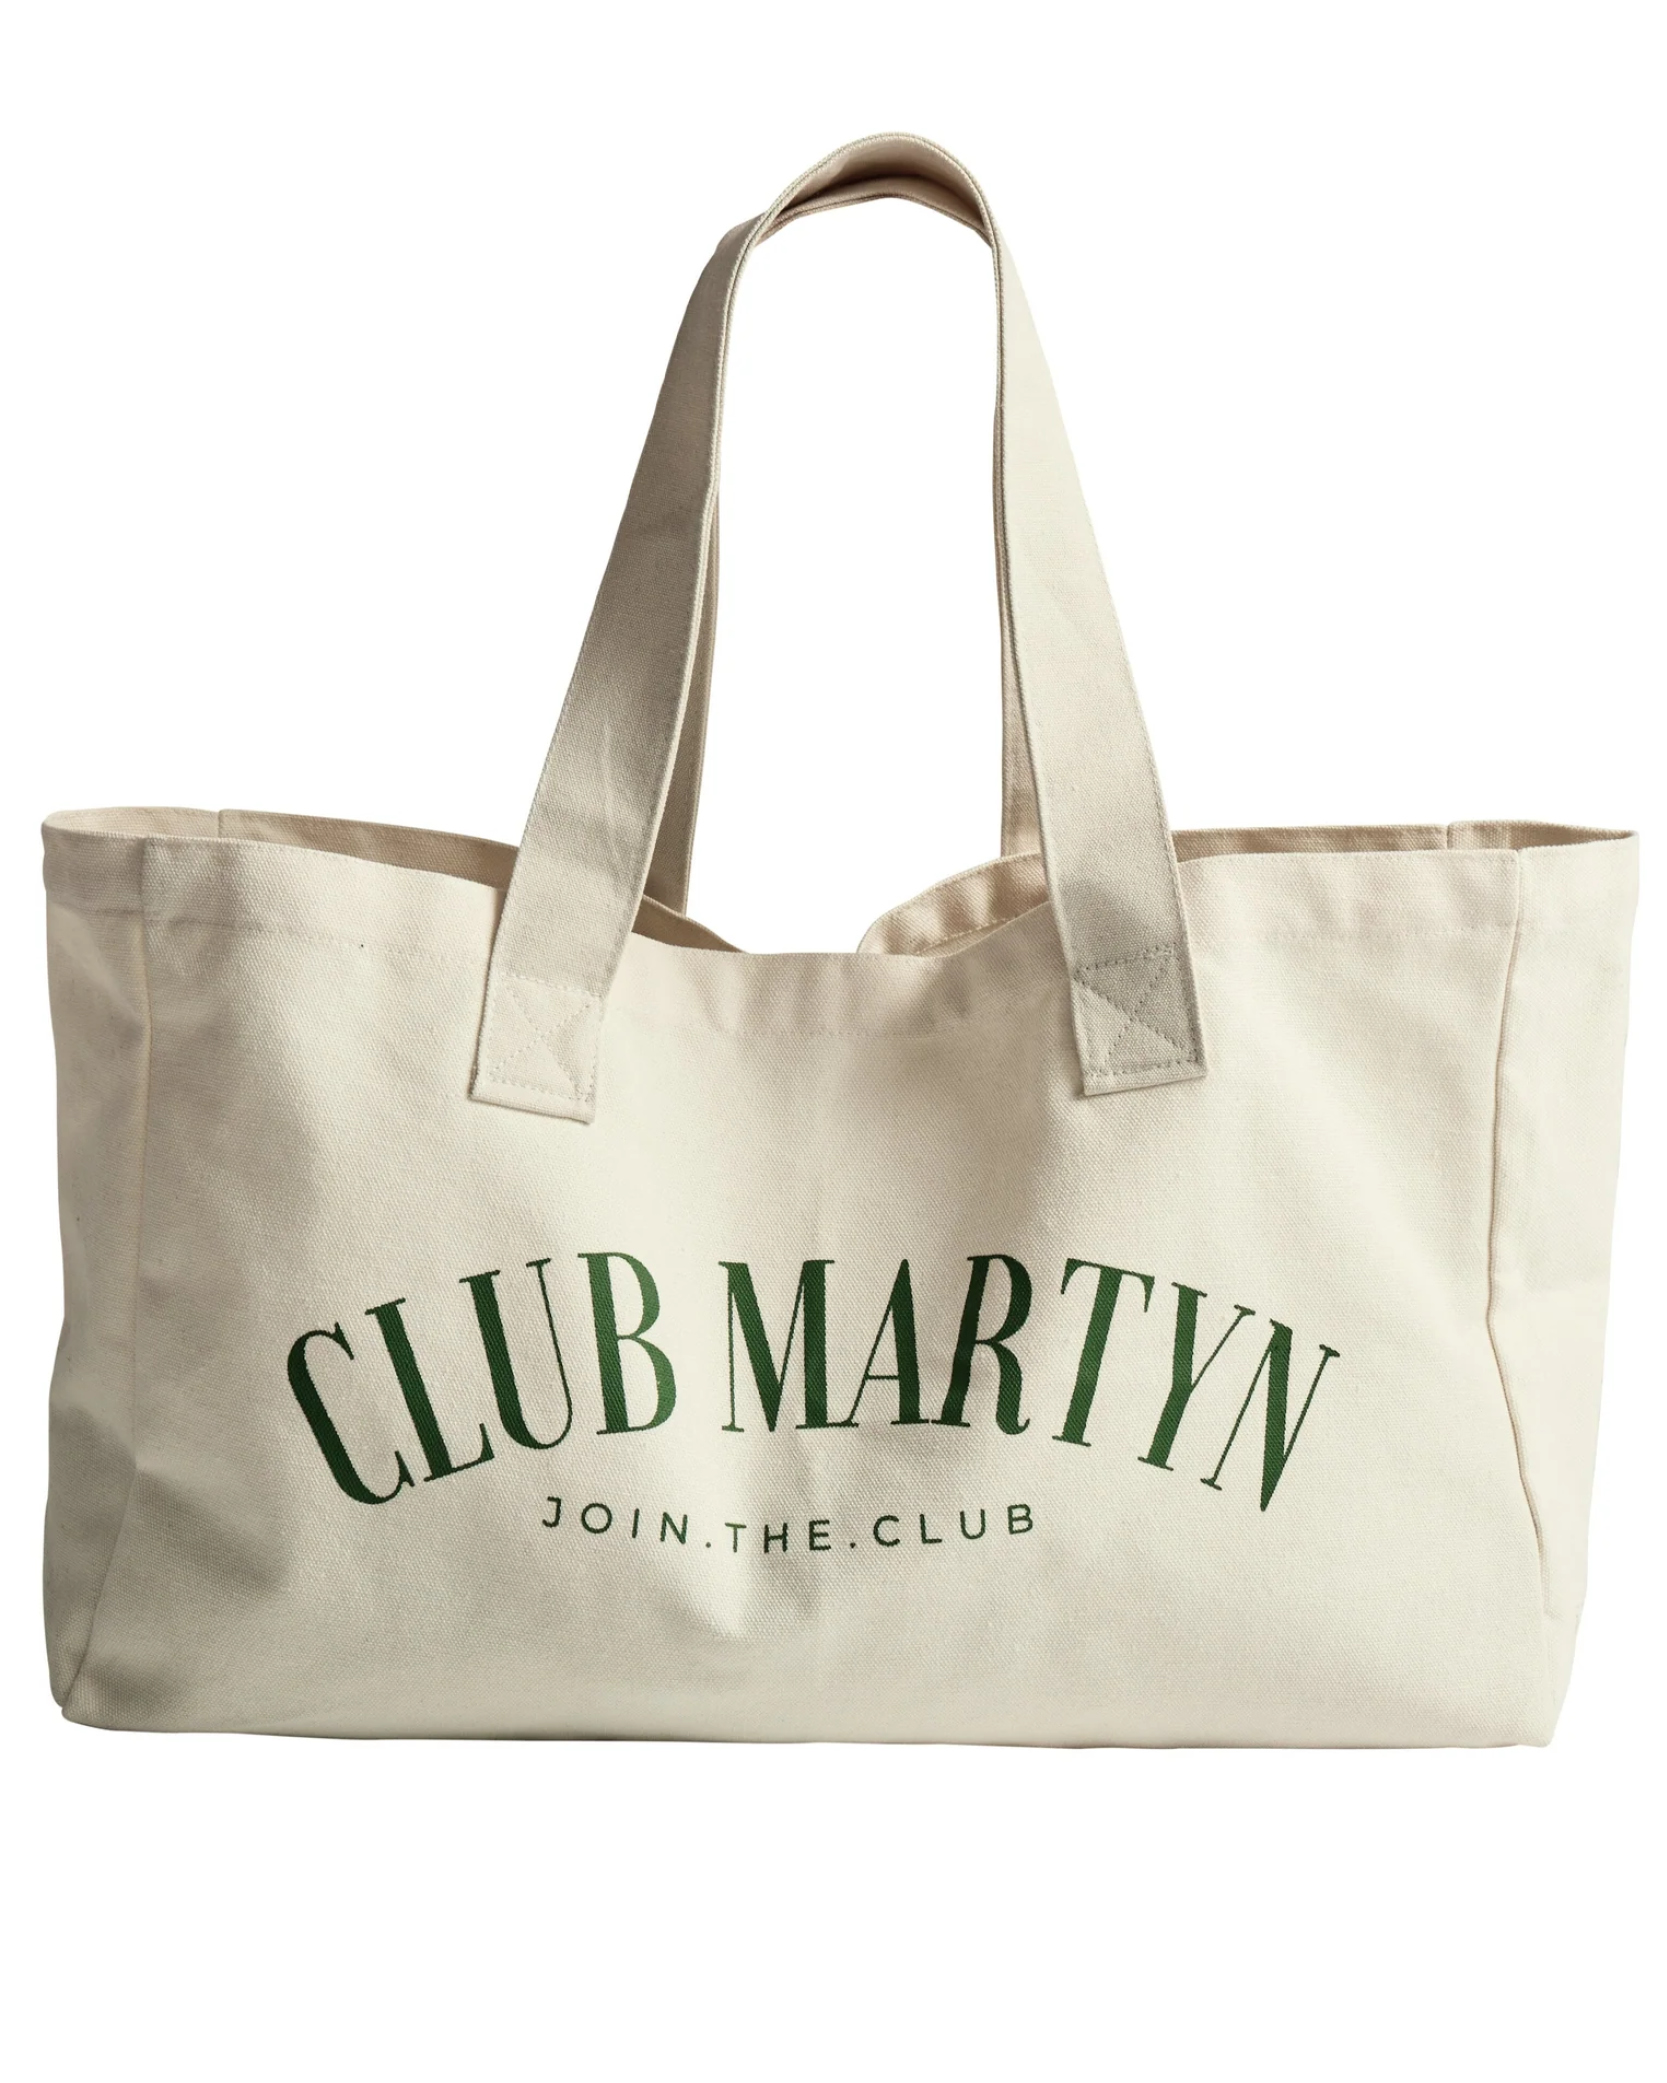 Club-Martyn-Tote-Bag-CreamKhaki-49.95